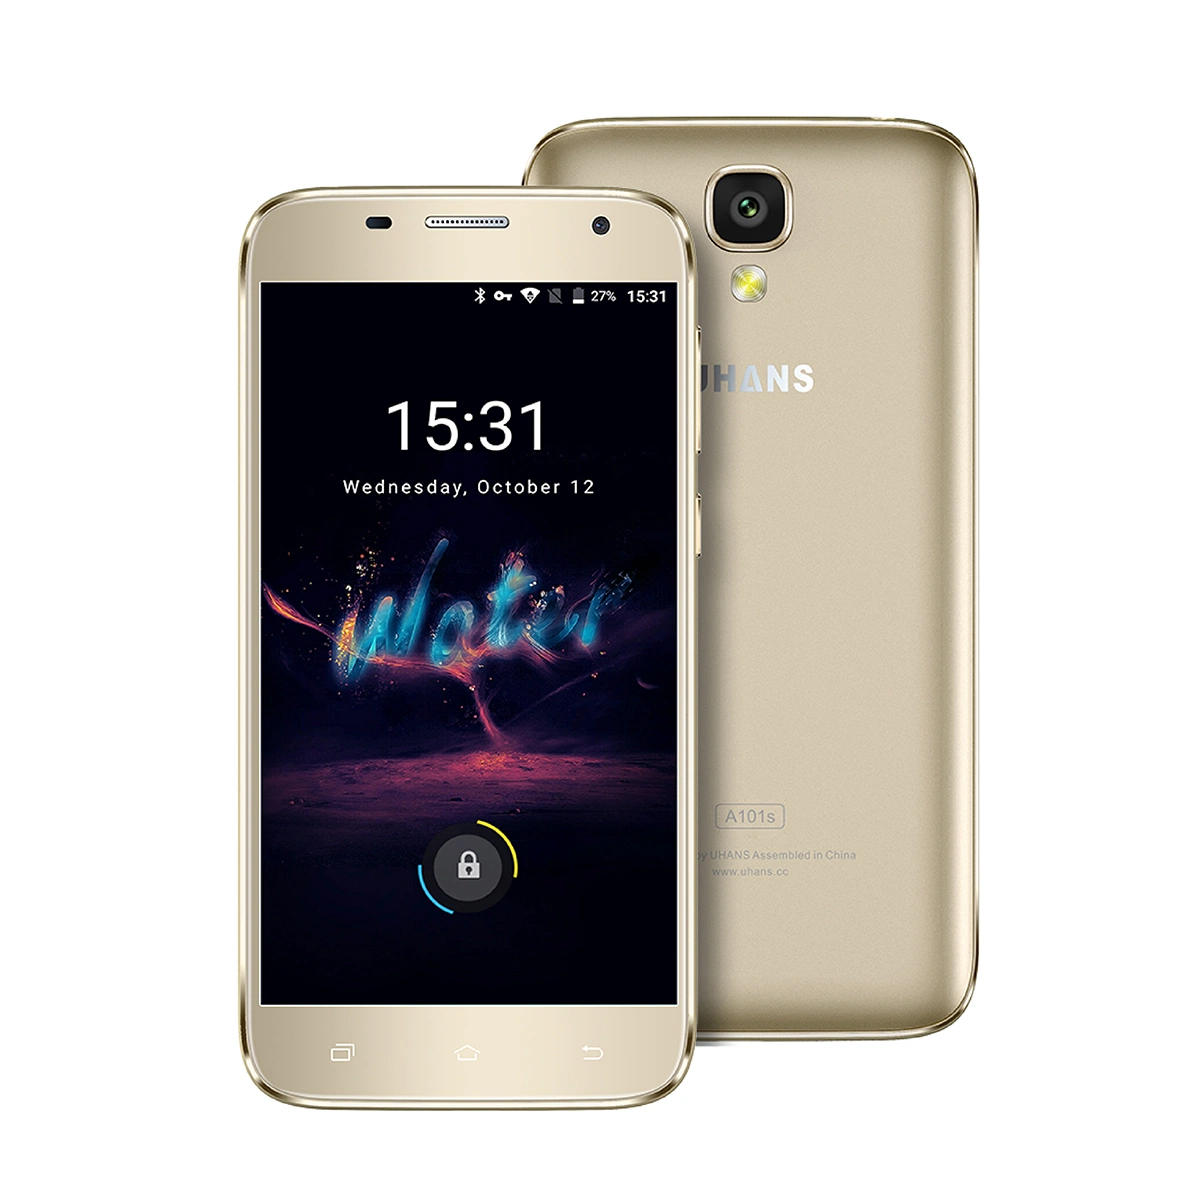 Hot Selling China Original Brand Uhans A101s Smart Phone